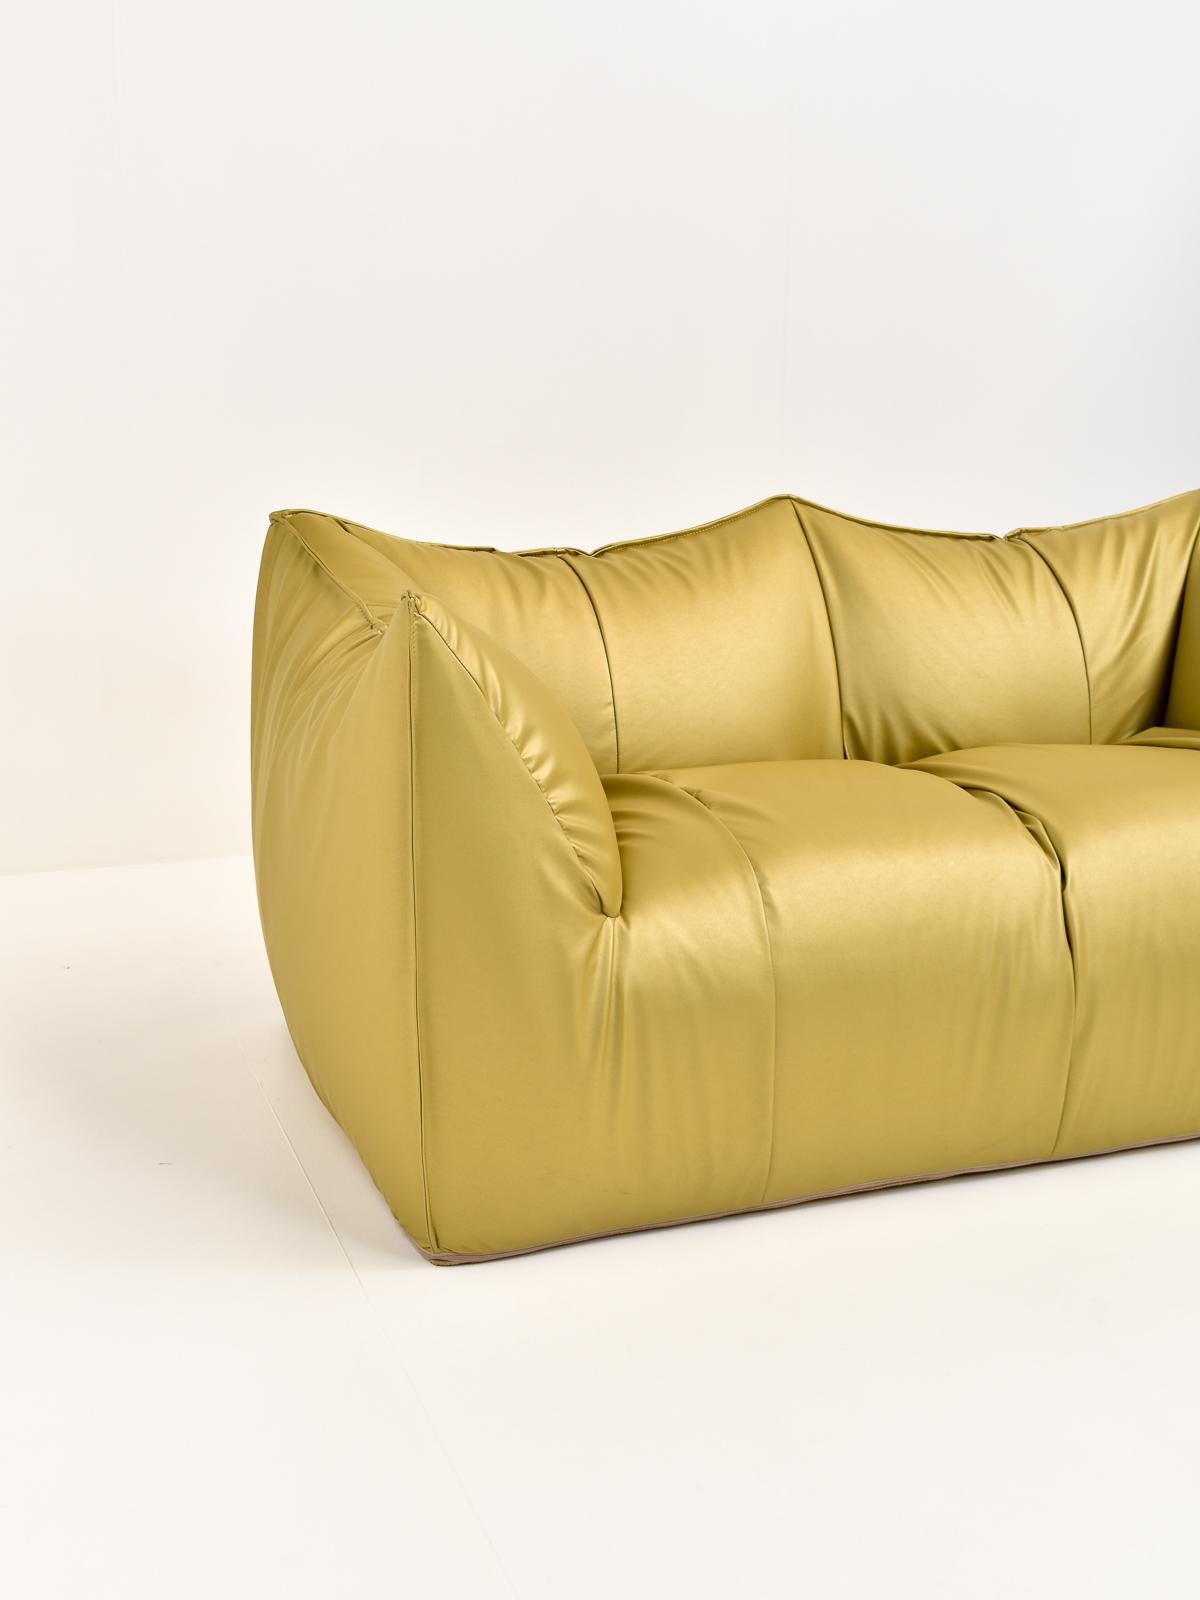 Leather Golden Le Bambole Sofa by Mario Bellini for B&B Italia